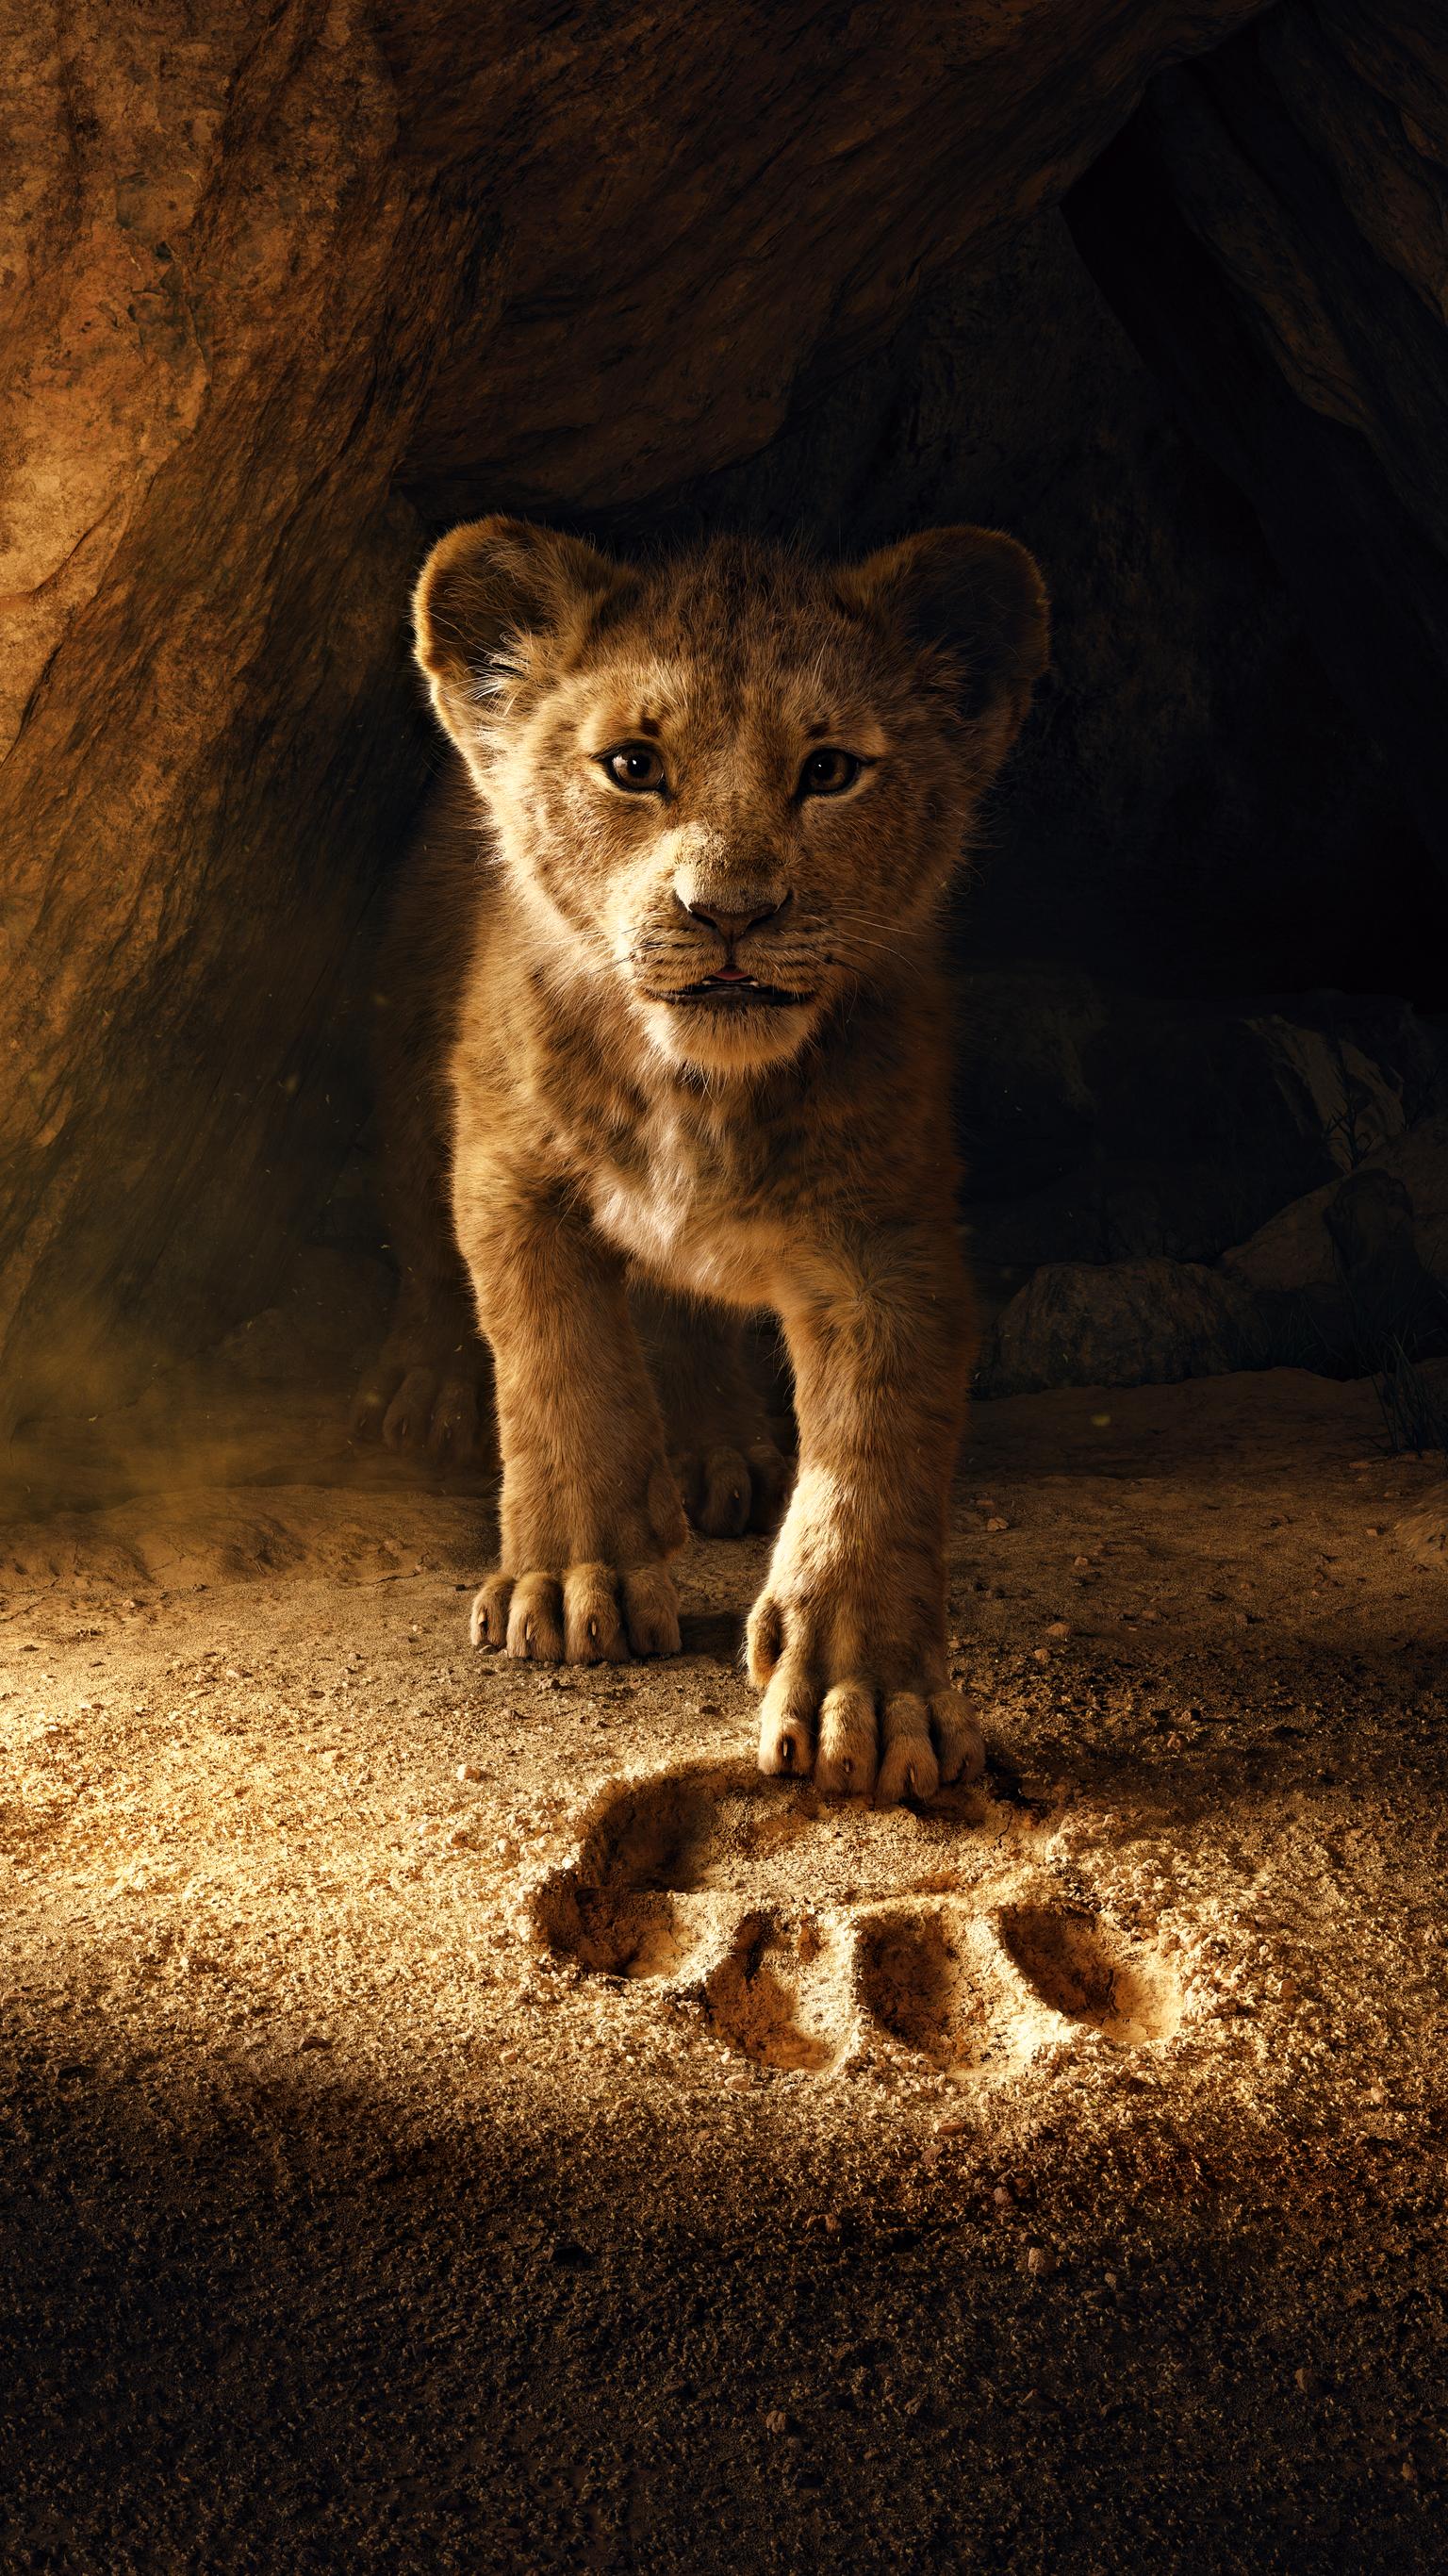 The Lion King (2019) Fondos de pantalla del teléfono | Moviemania